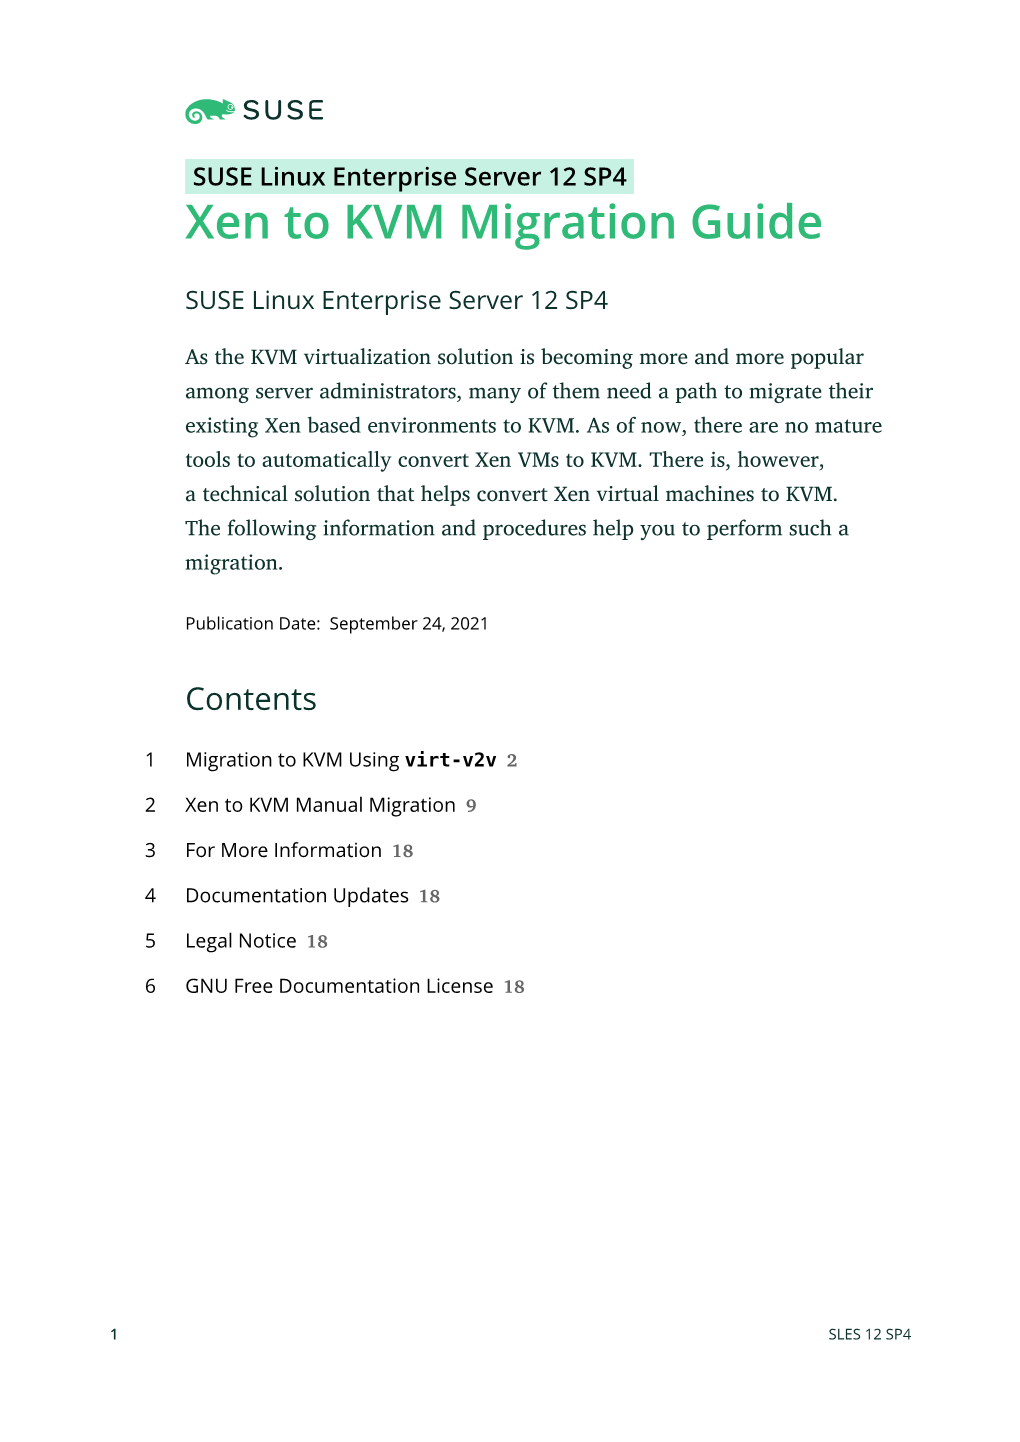 Xen to KVM Migration Guide